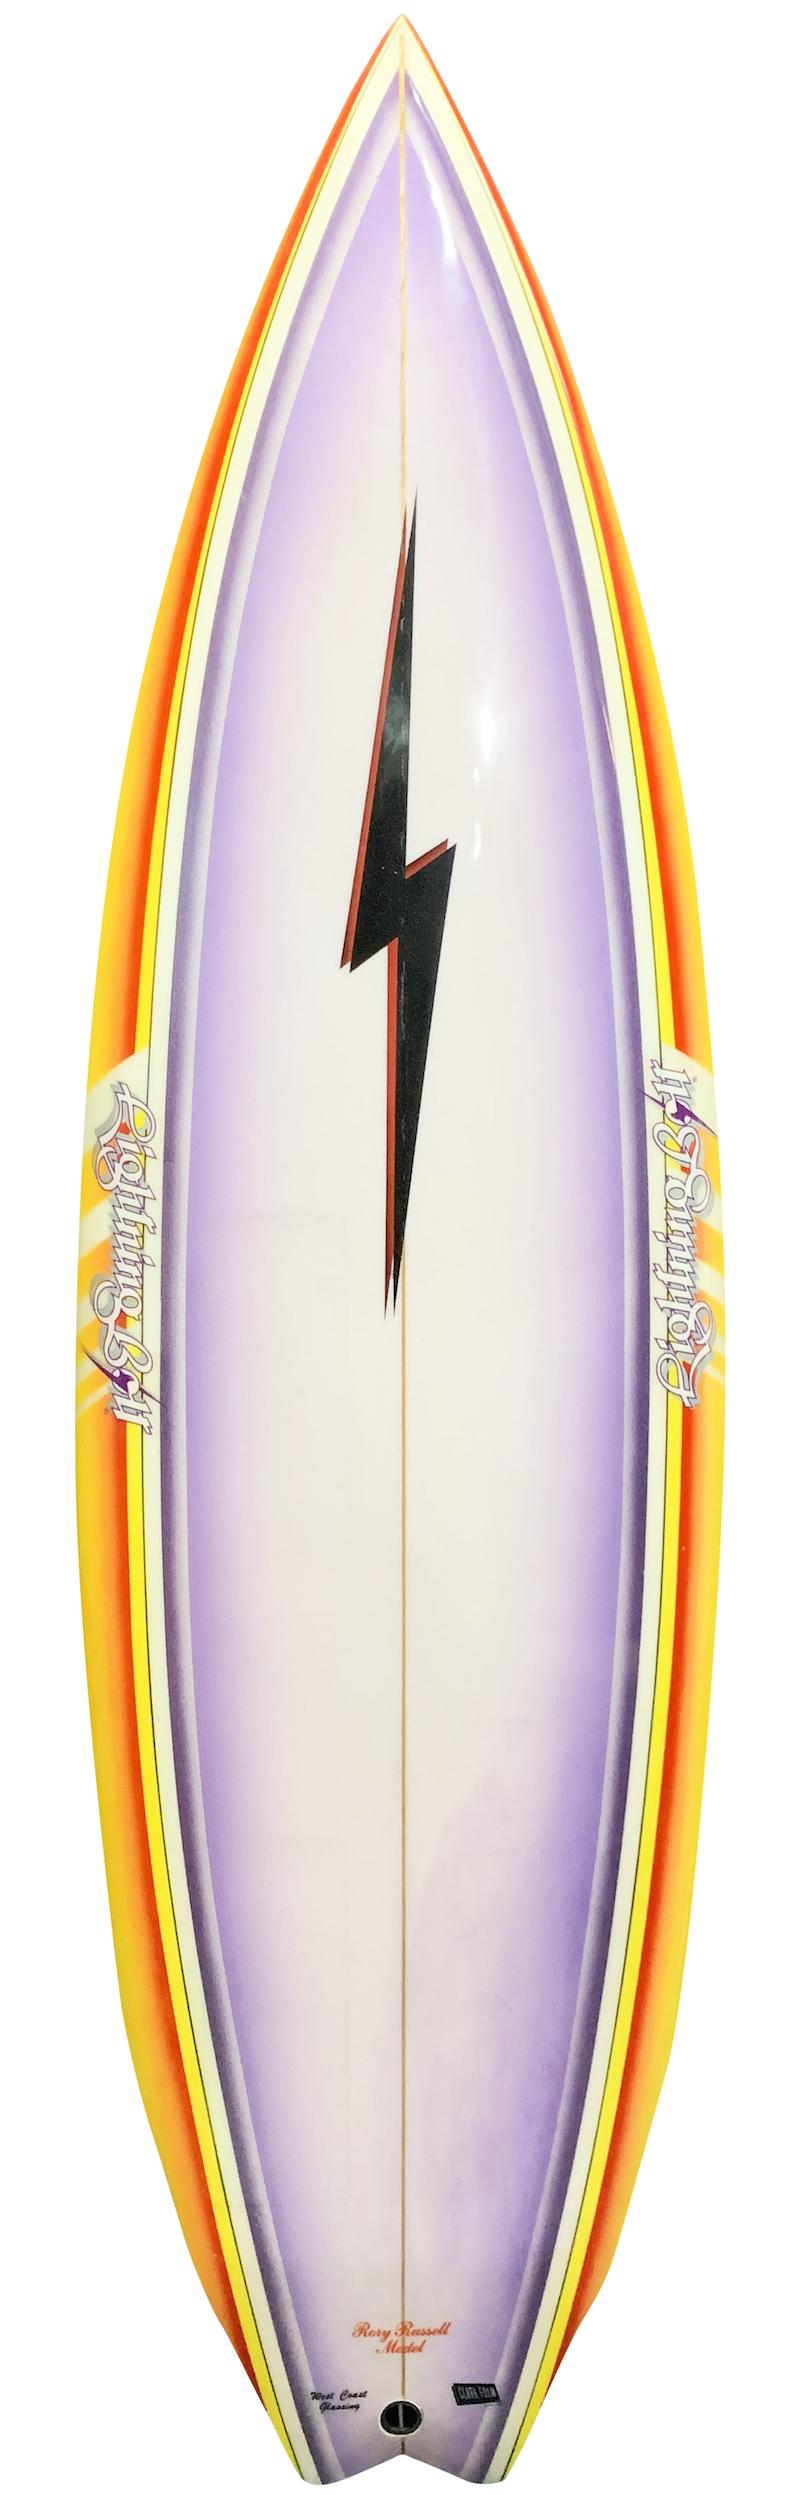 1980's Vintage Lightning Bolt Rory Russell model surfboard